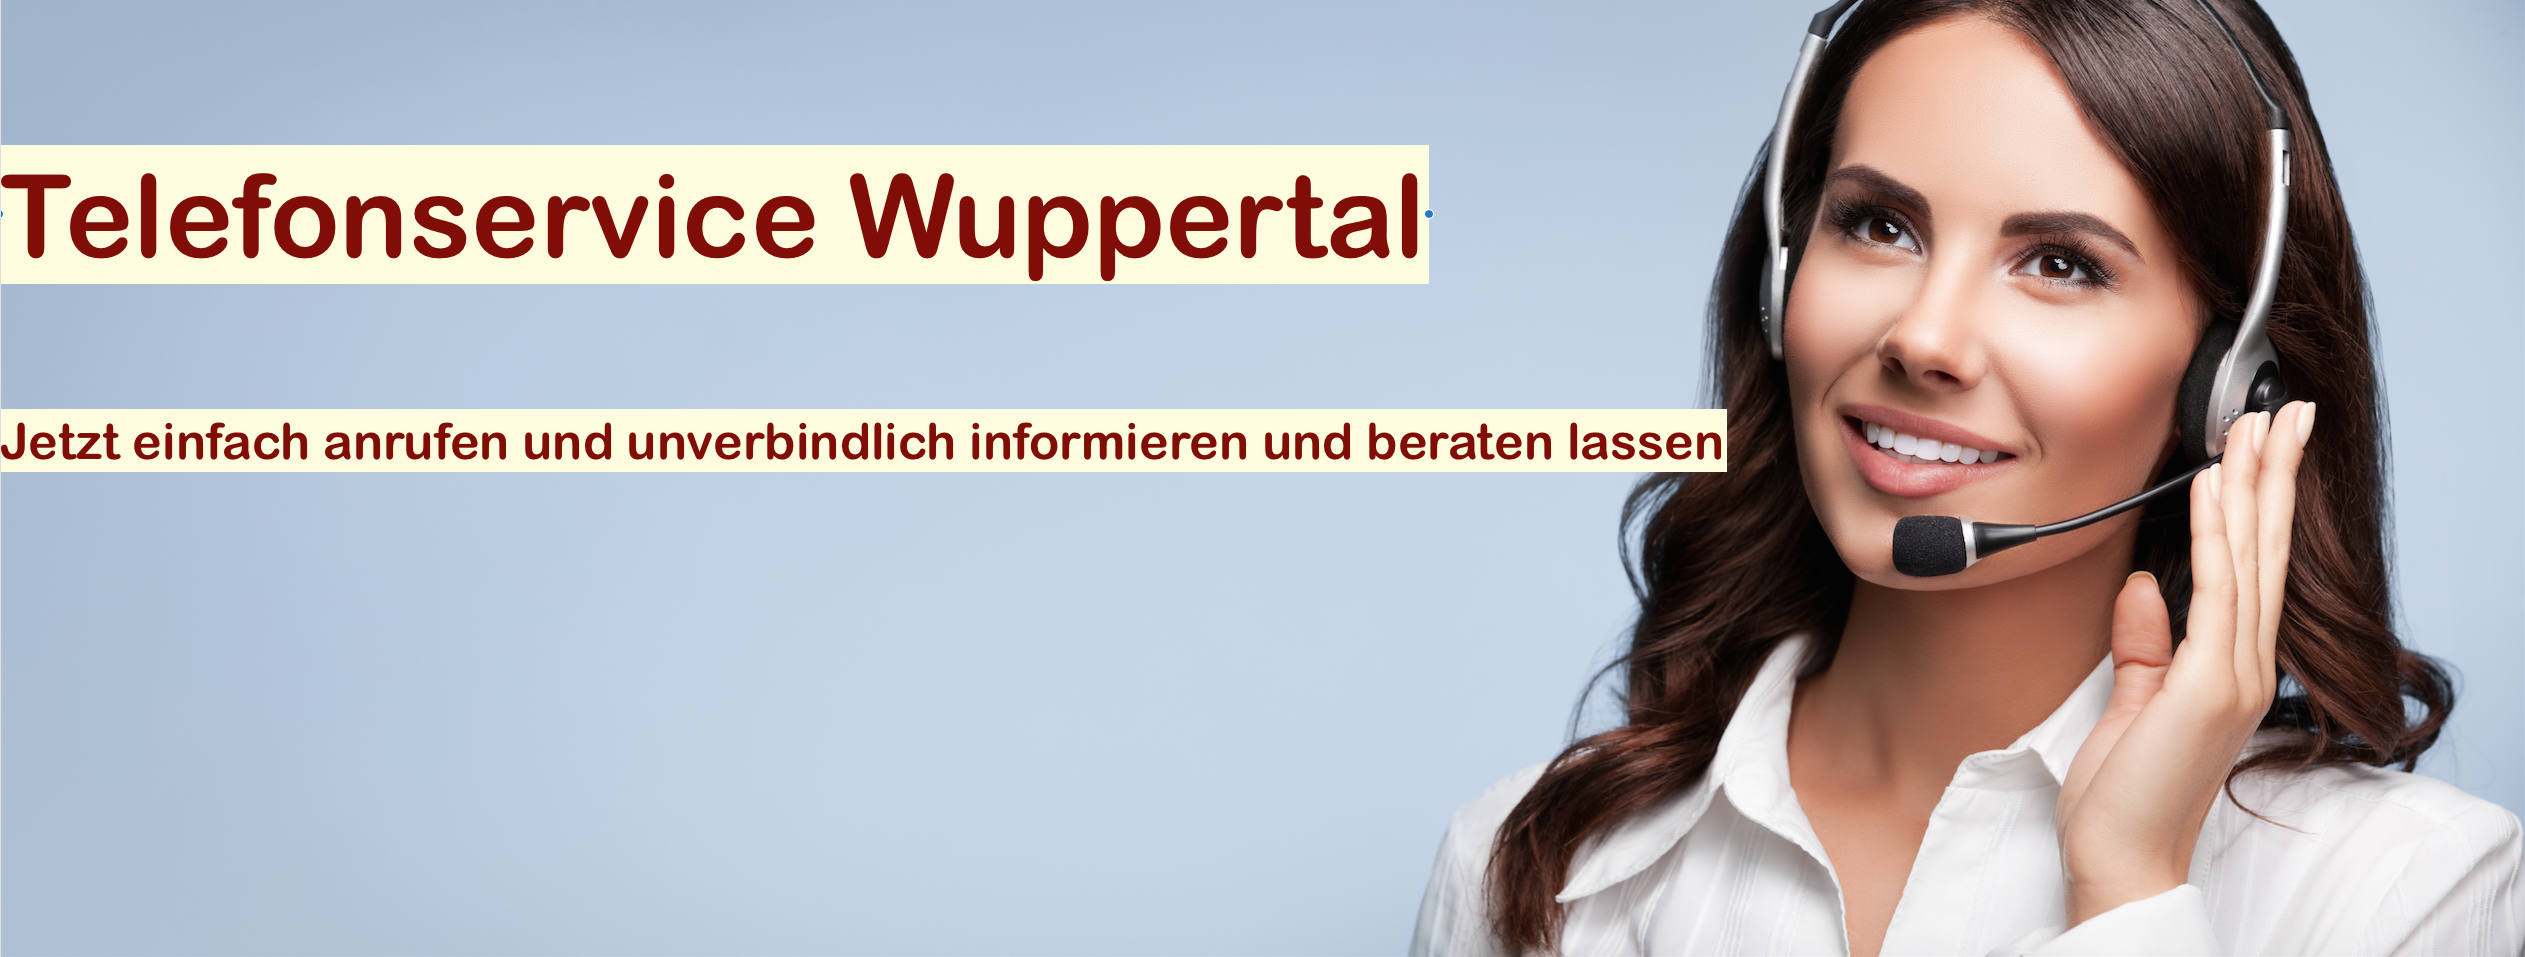 Telefonservice Wuppertal